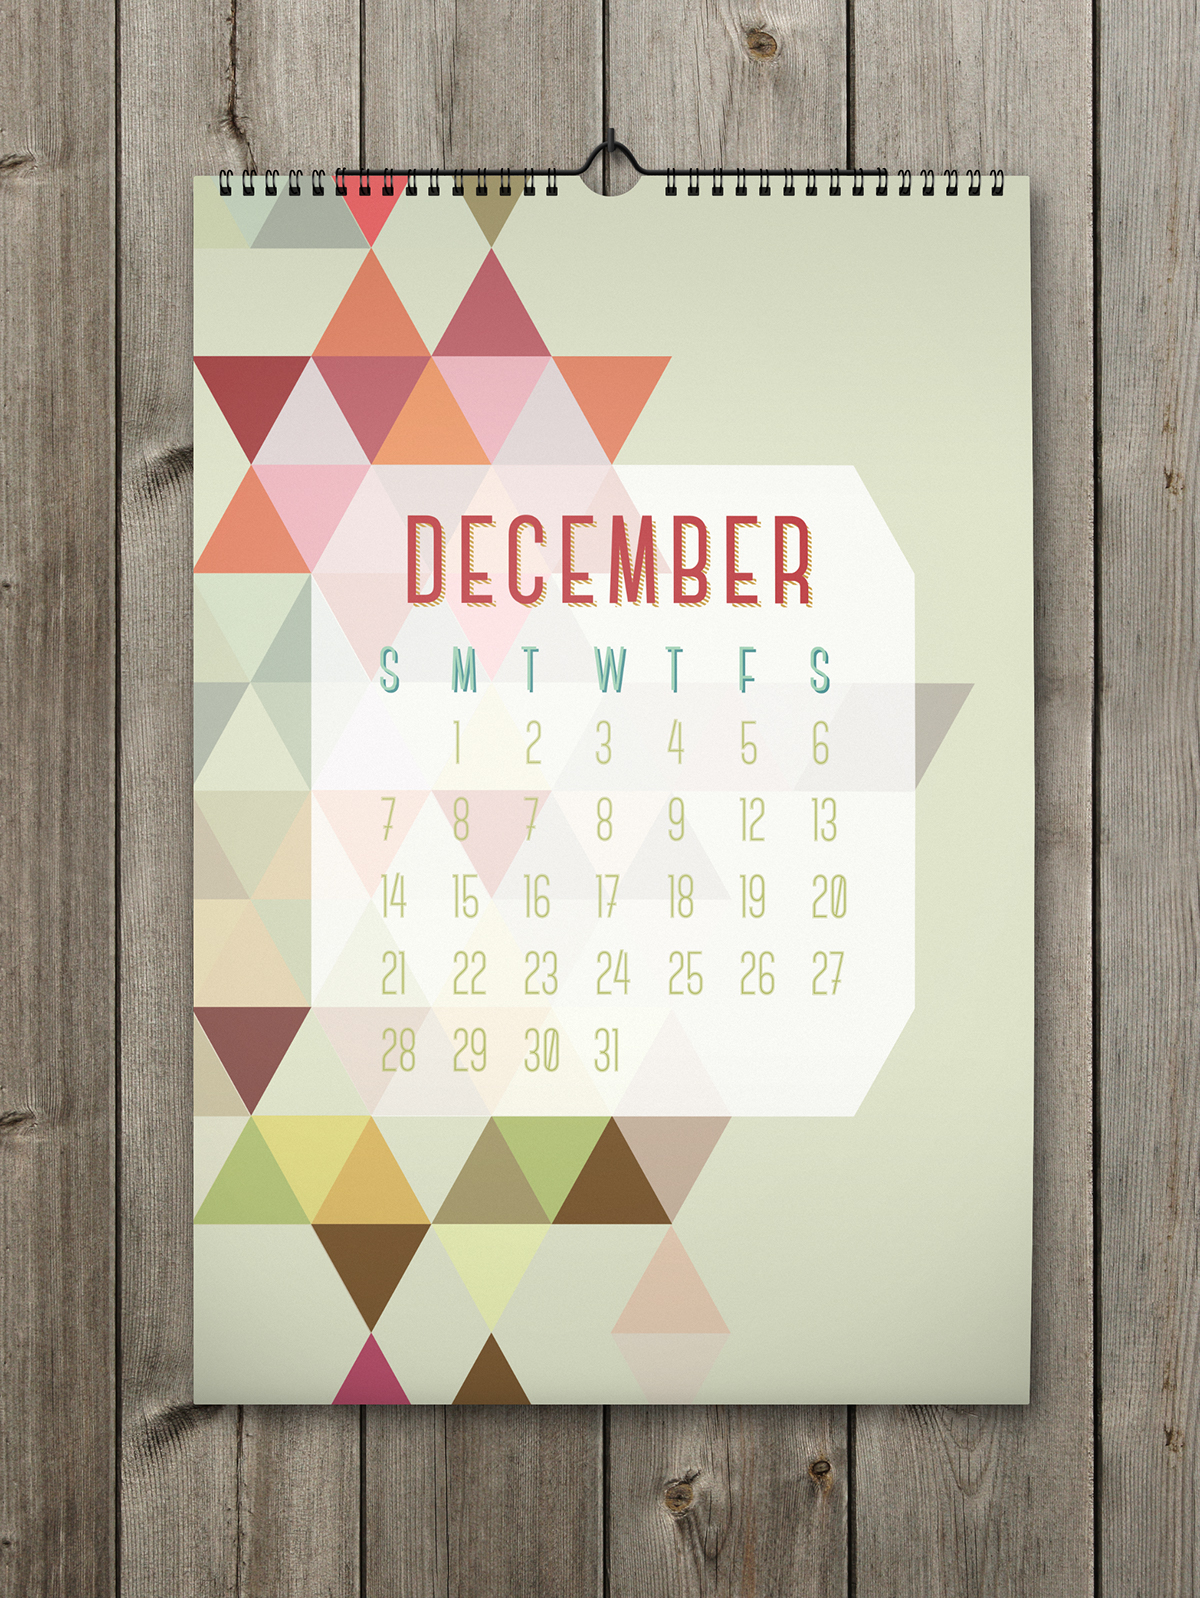 2014 Calendar shapes lines pattern new year agenda Christmas xmas colors Forms Palermo sicily abstract Shades calendario